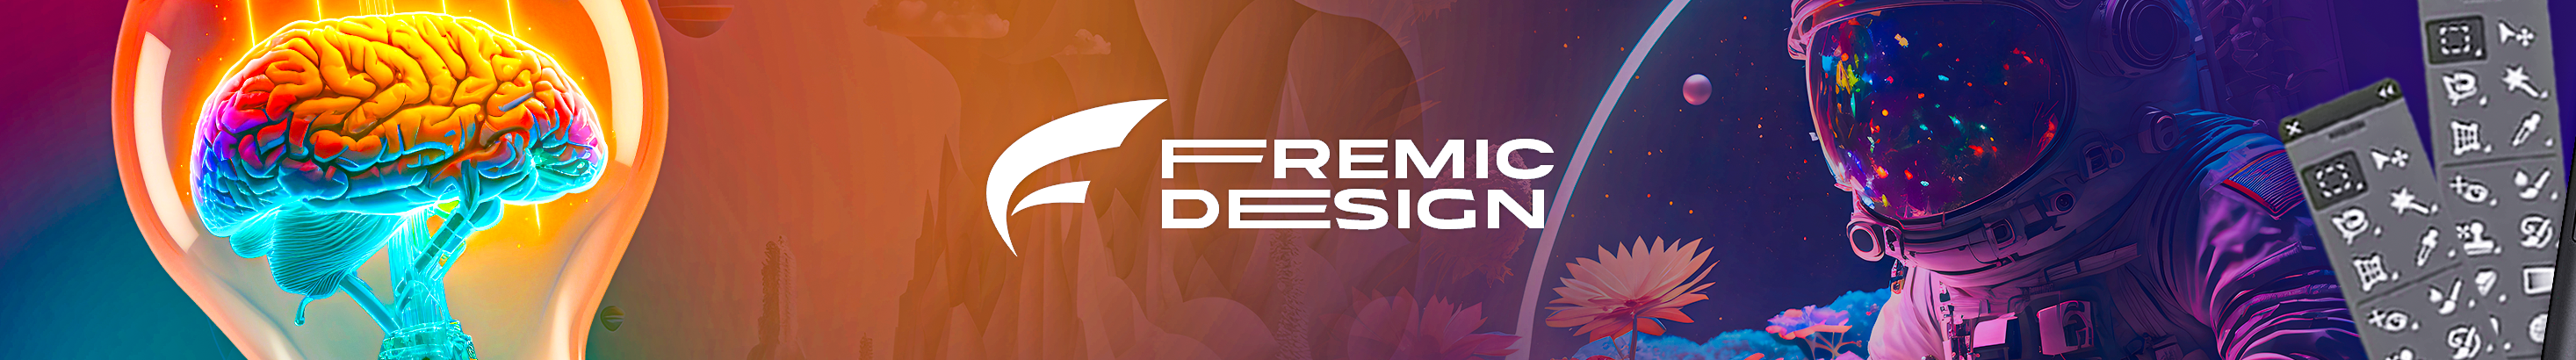 Fremic Designs profilbanner